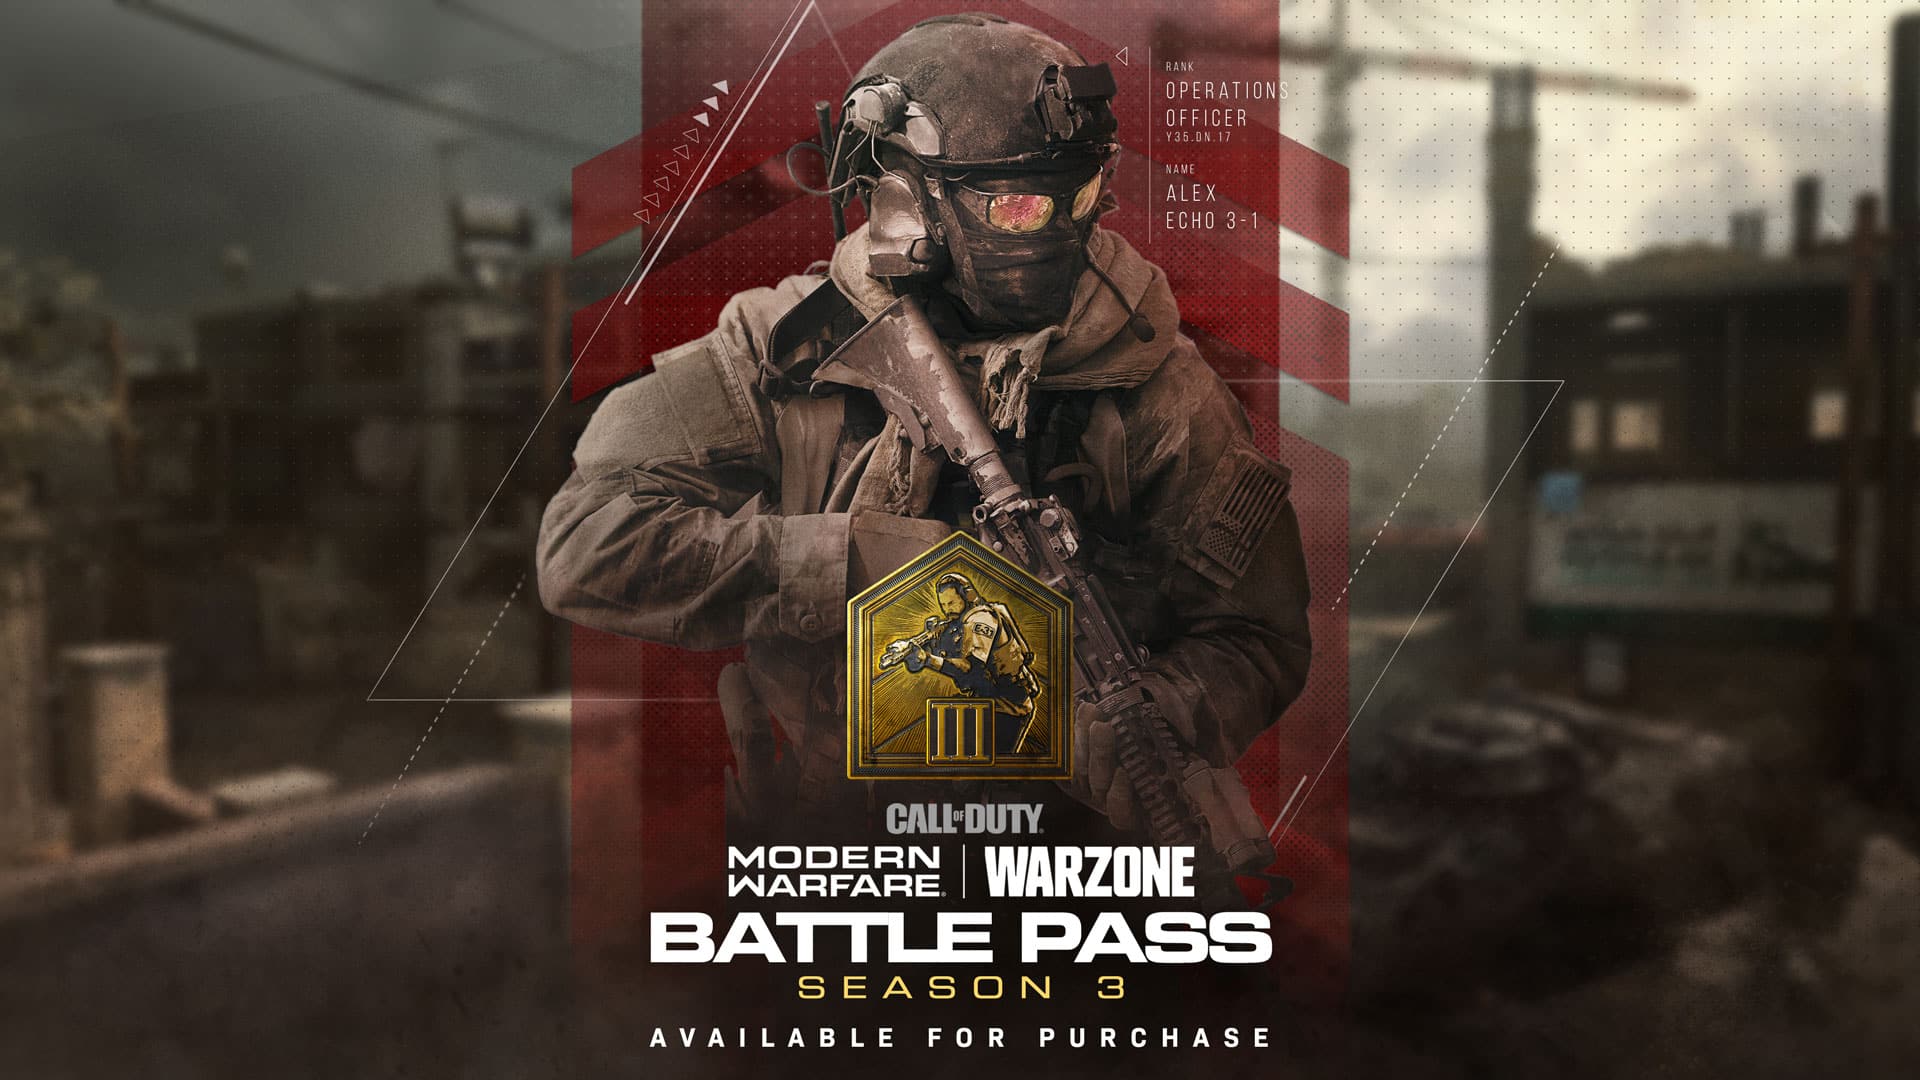 Modern Warfare and Warzone Season 3 Battle Pass Overview